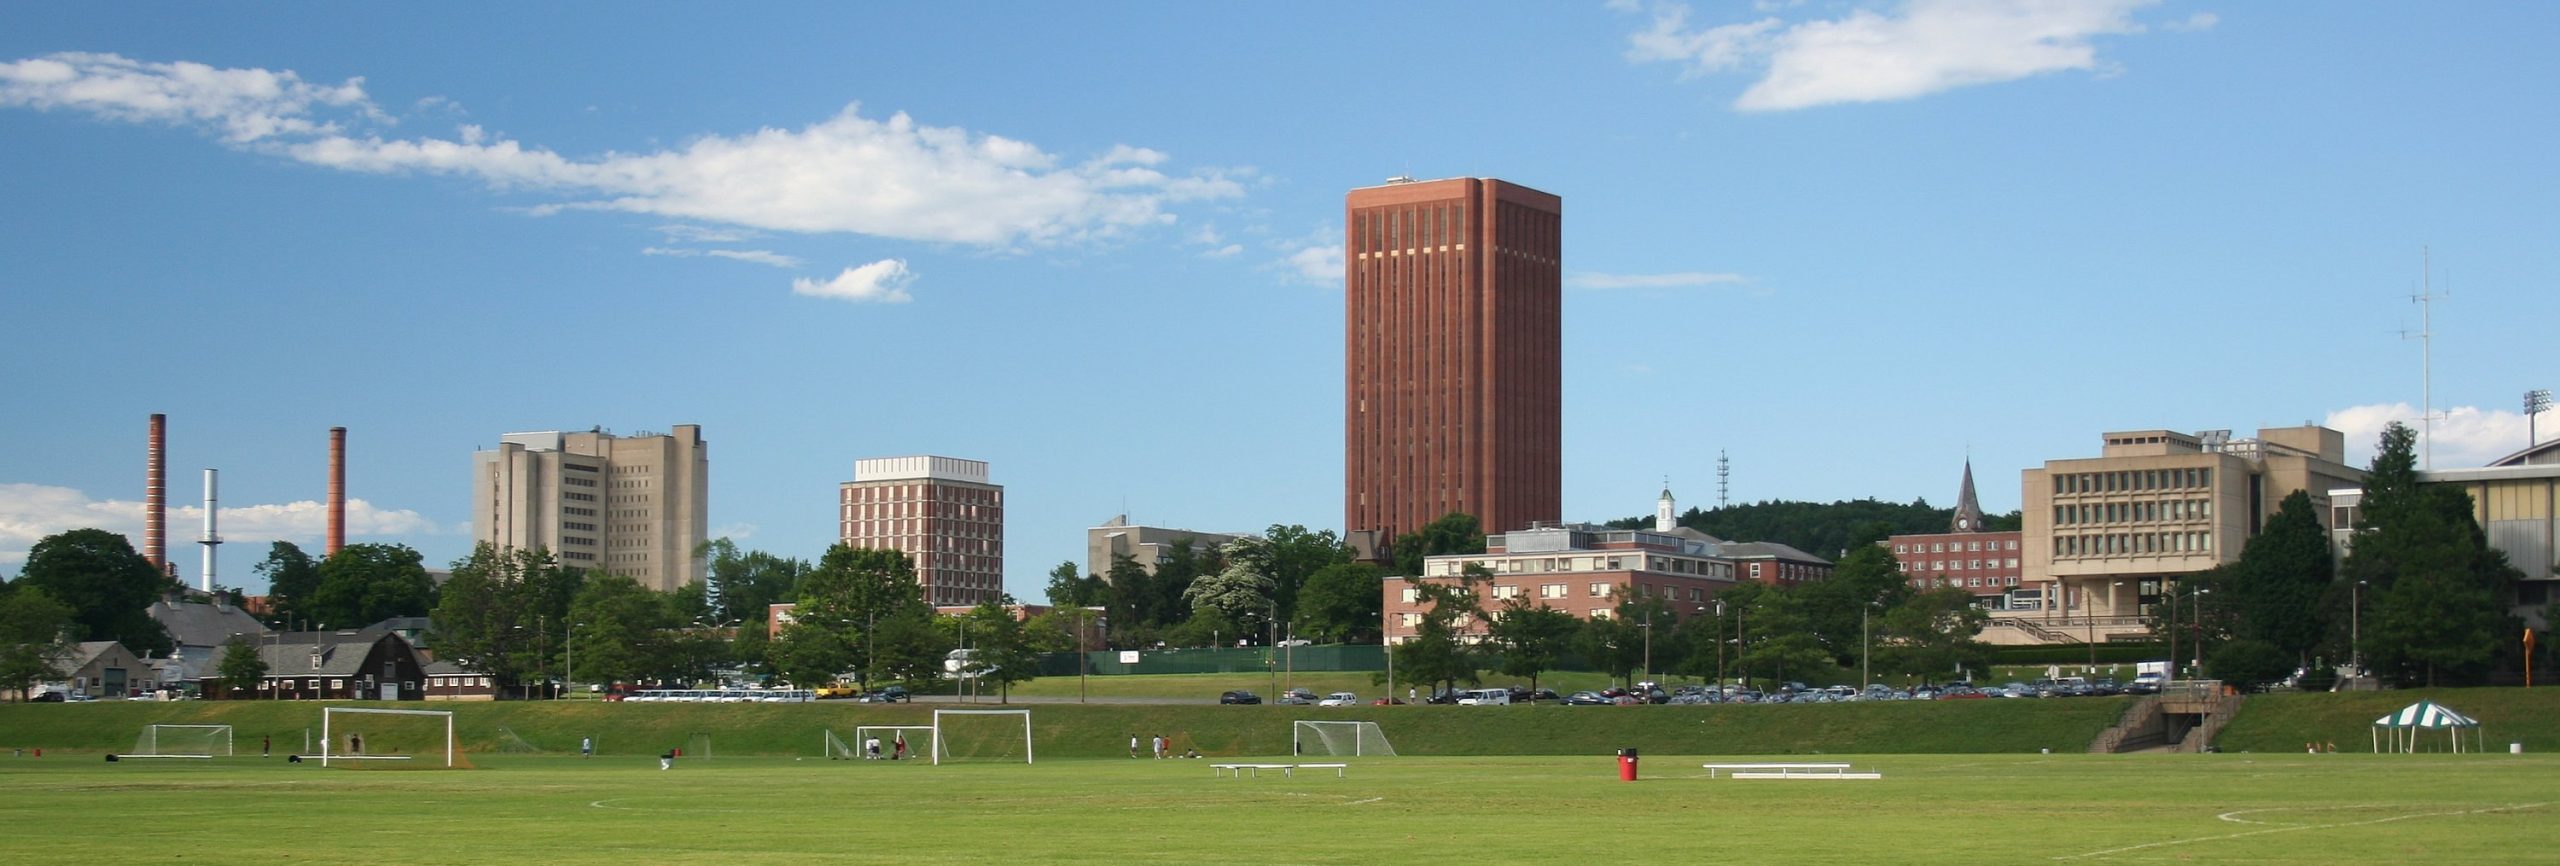 University of Massachusetts Skyline